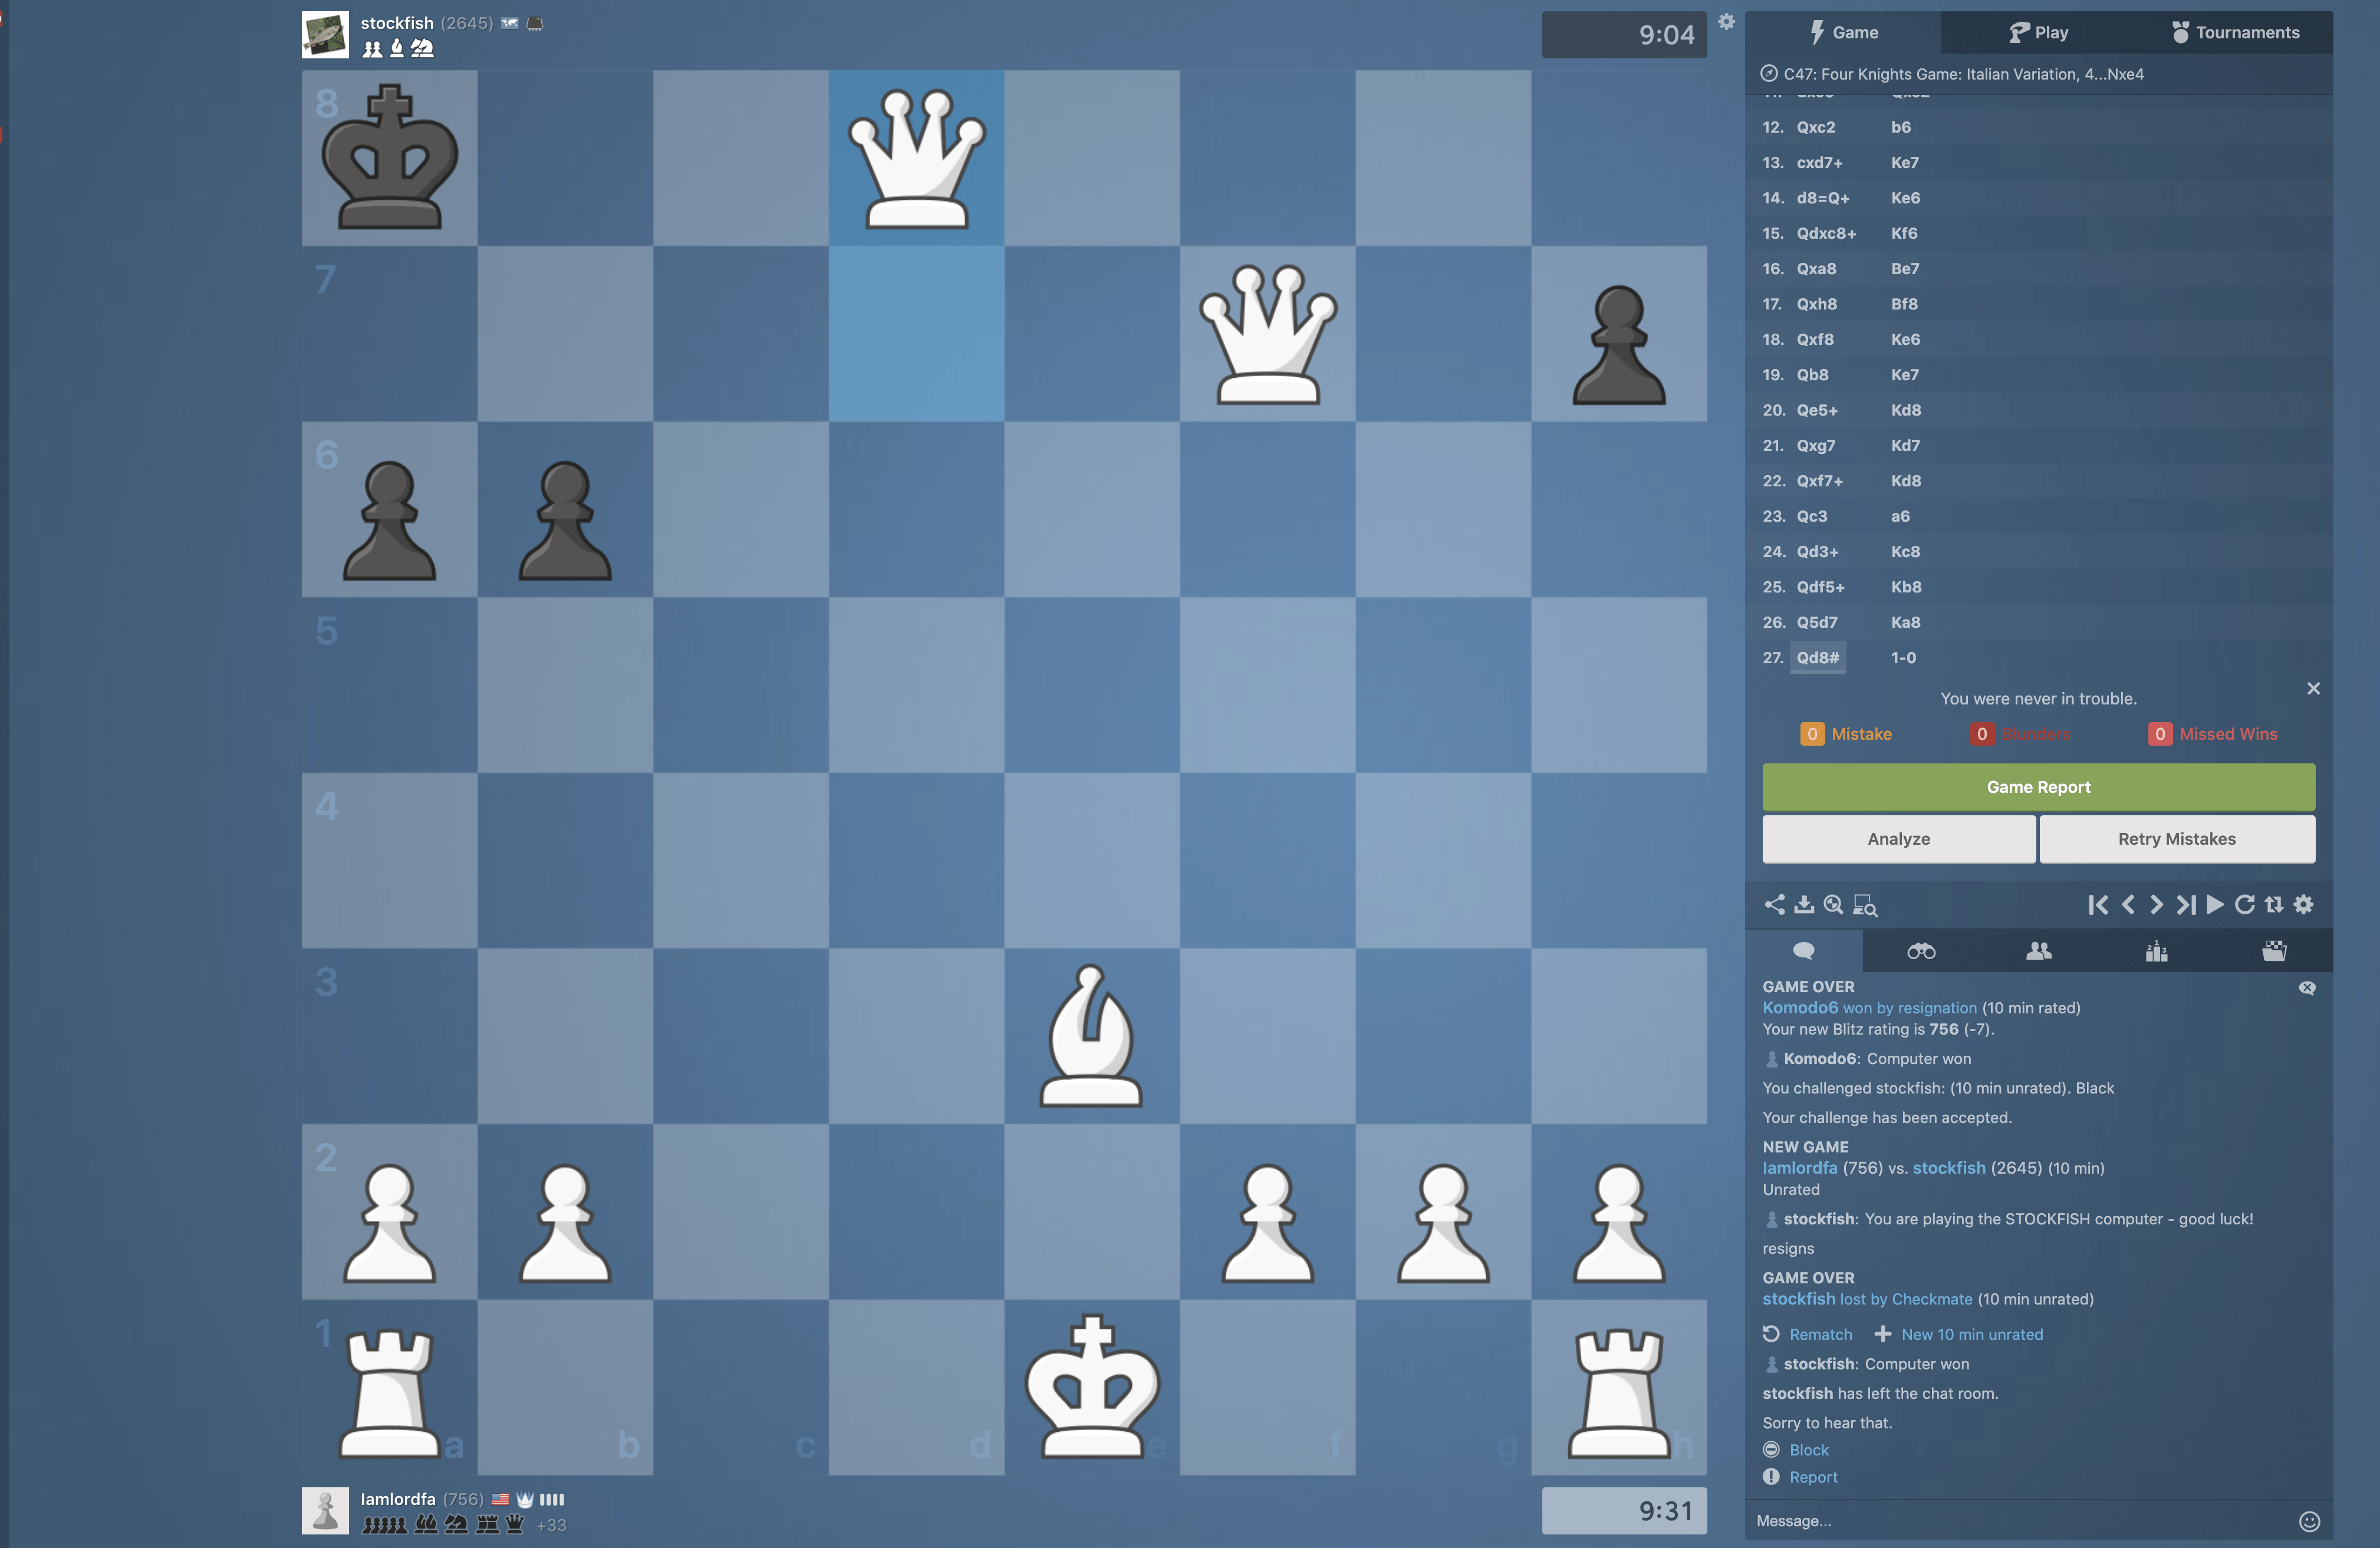 AlphaZero beats Stockfish in chess match